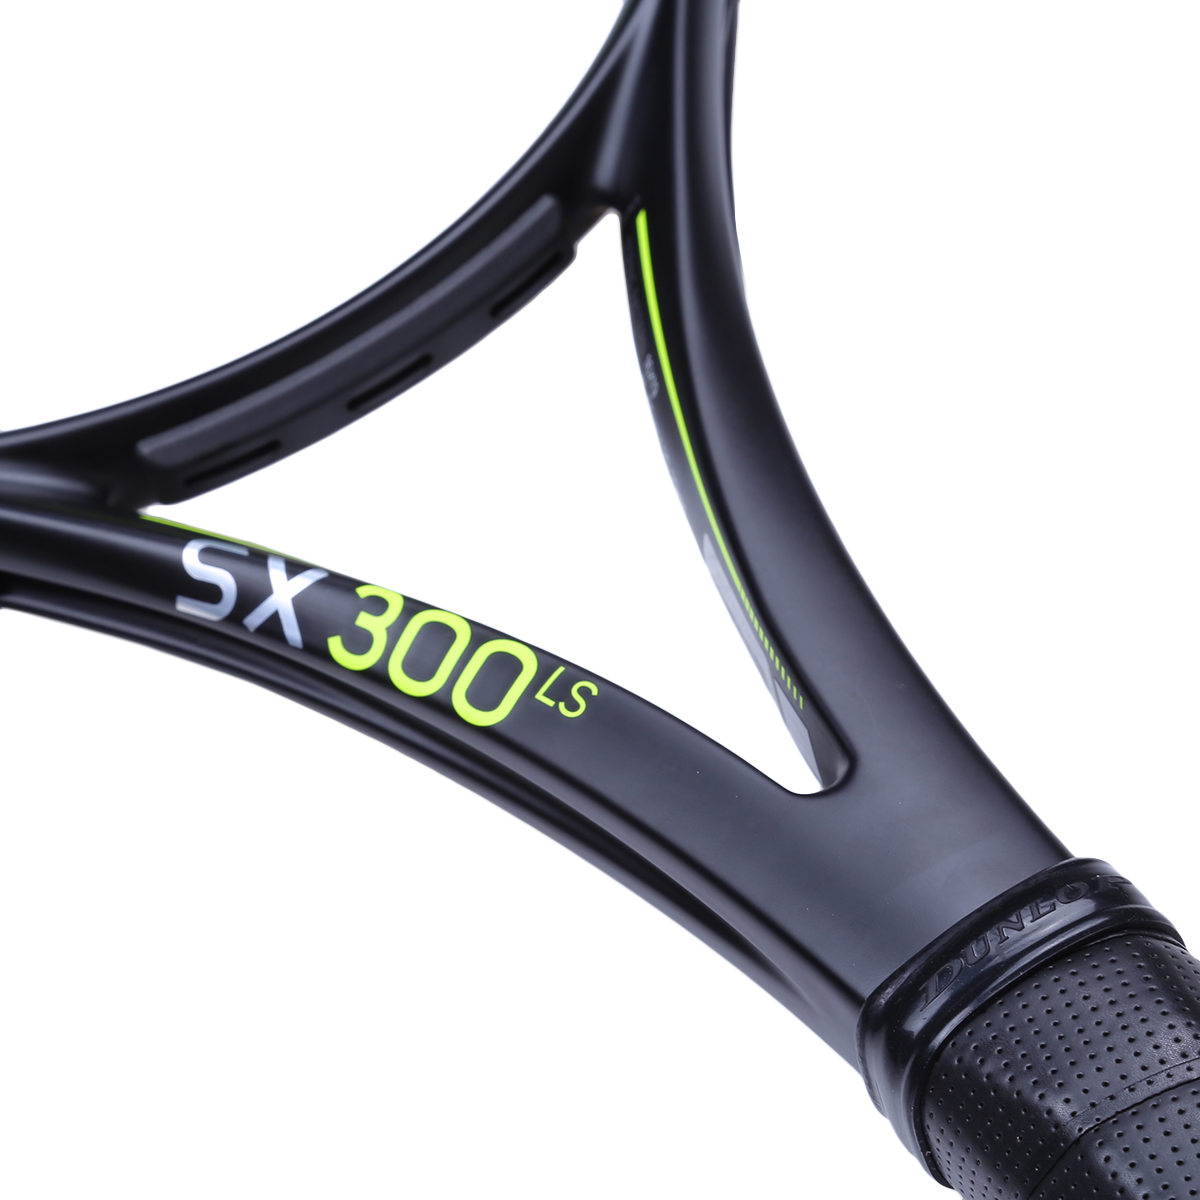 Raqueta Dunlop SX 300 LS,  image number null